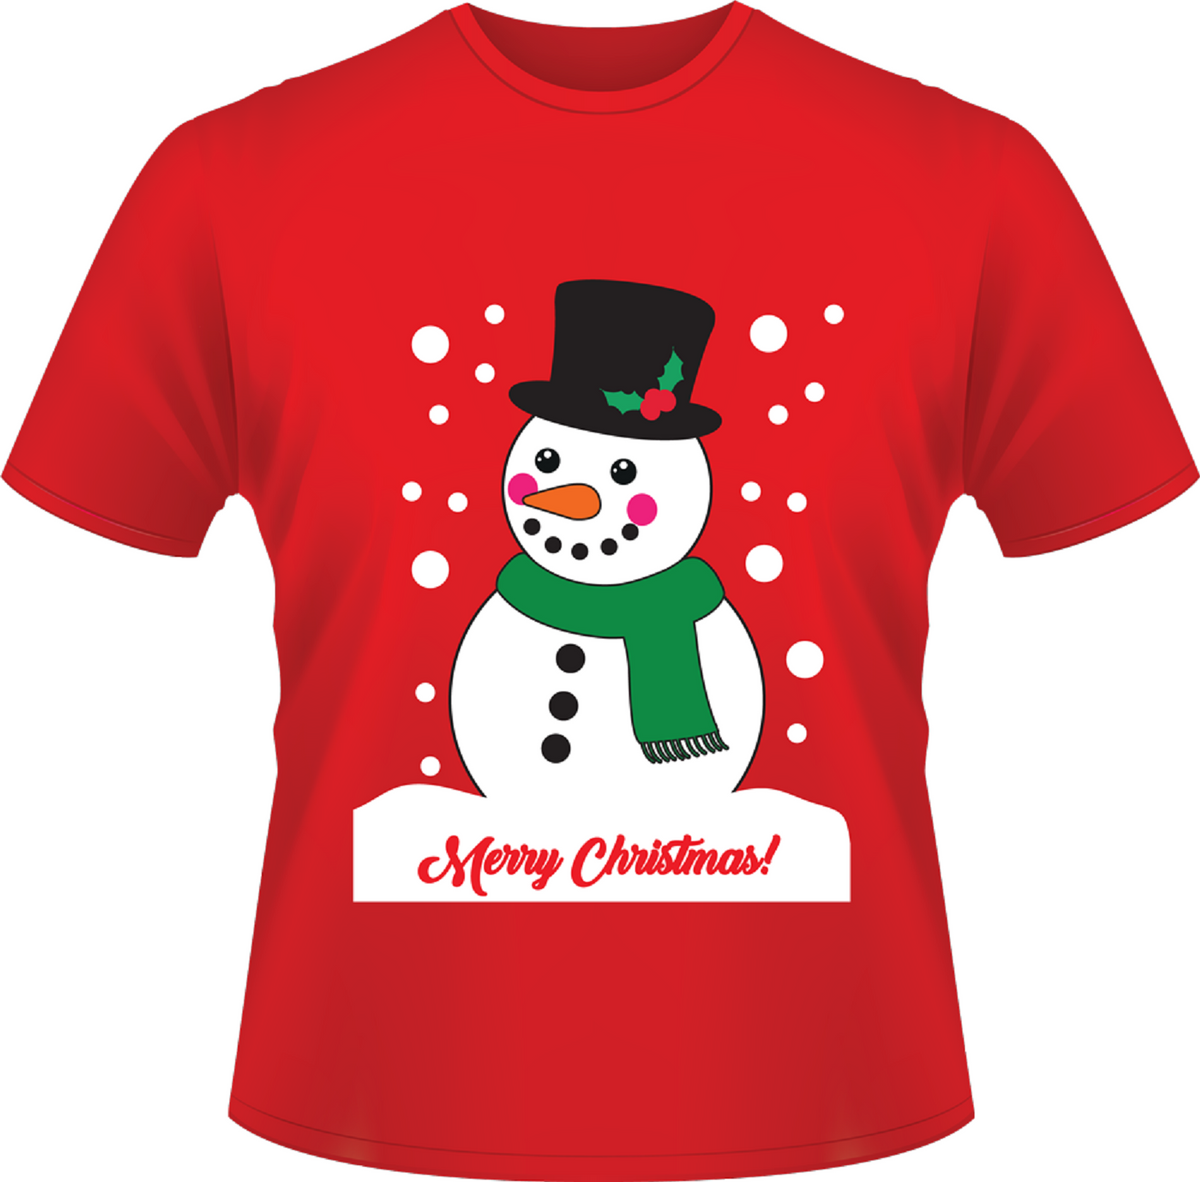 Novelty Unisex Festive Christmas T-Shirt - Snowman – PINKBLUEWHITE